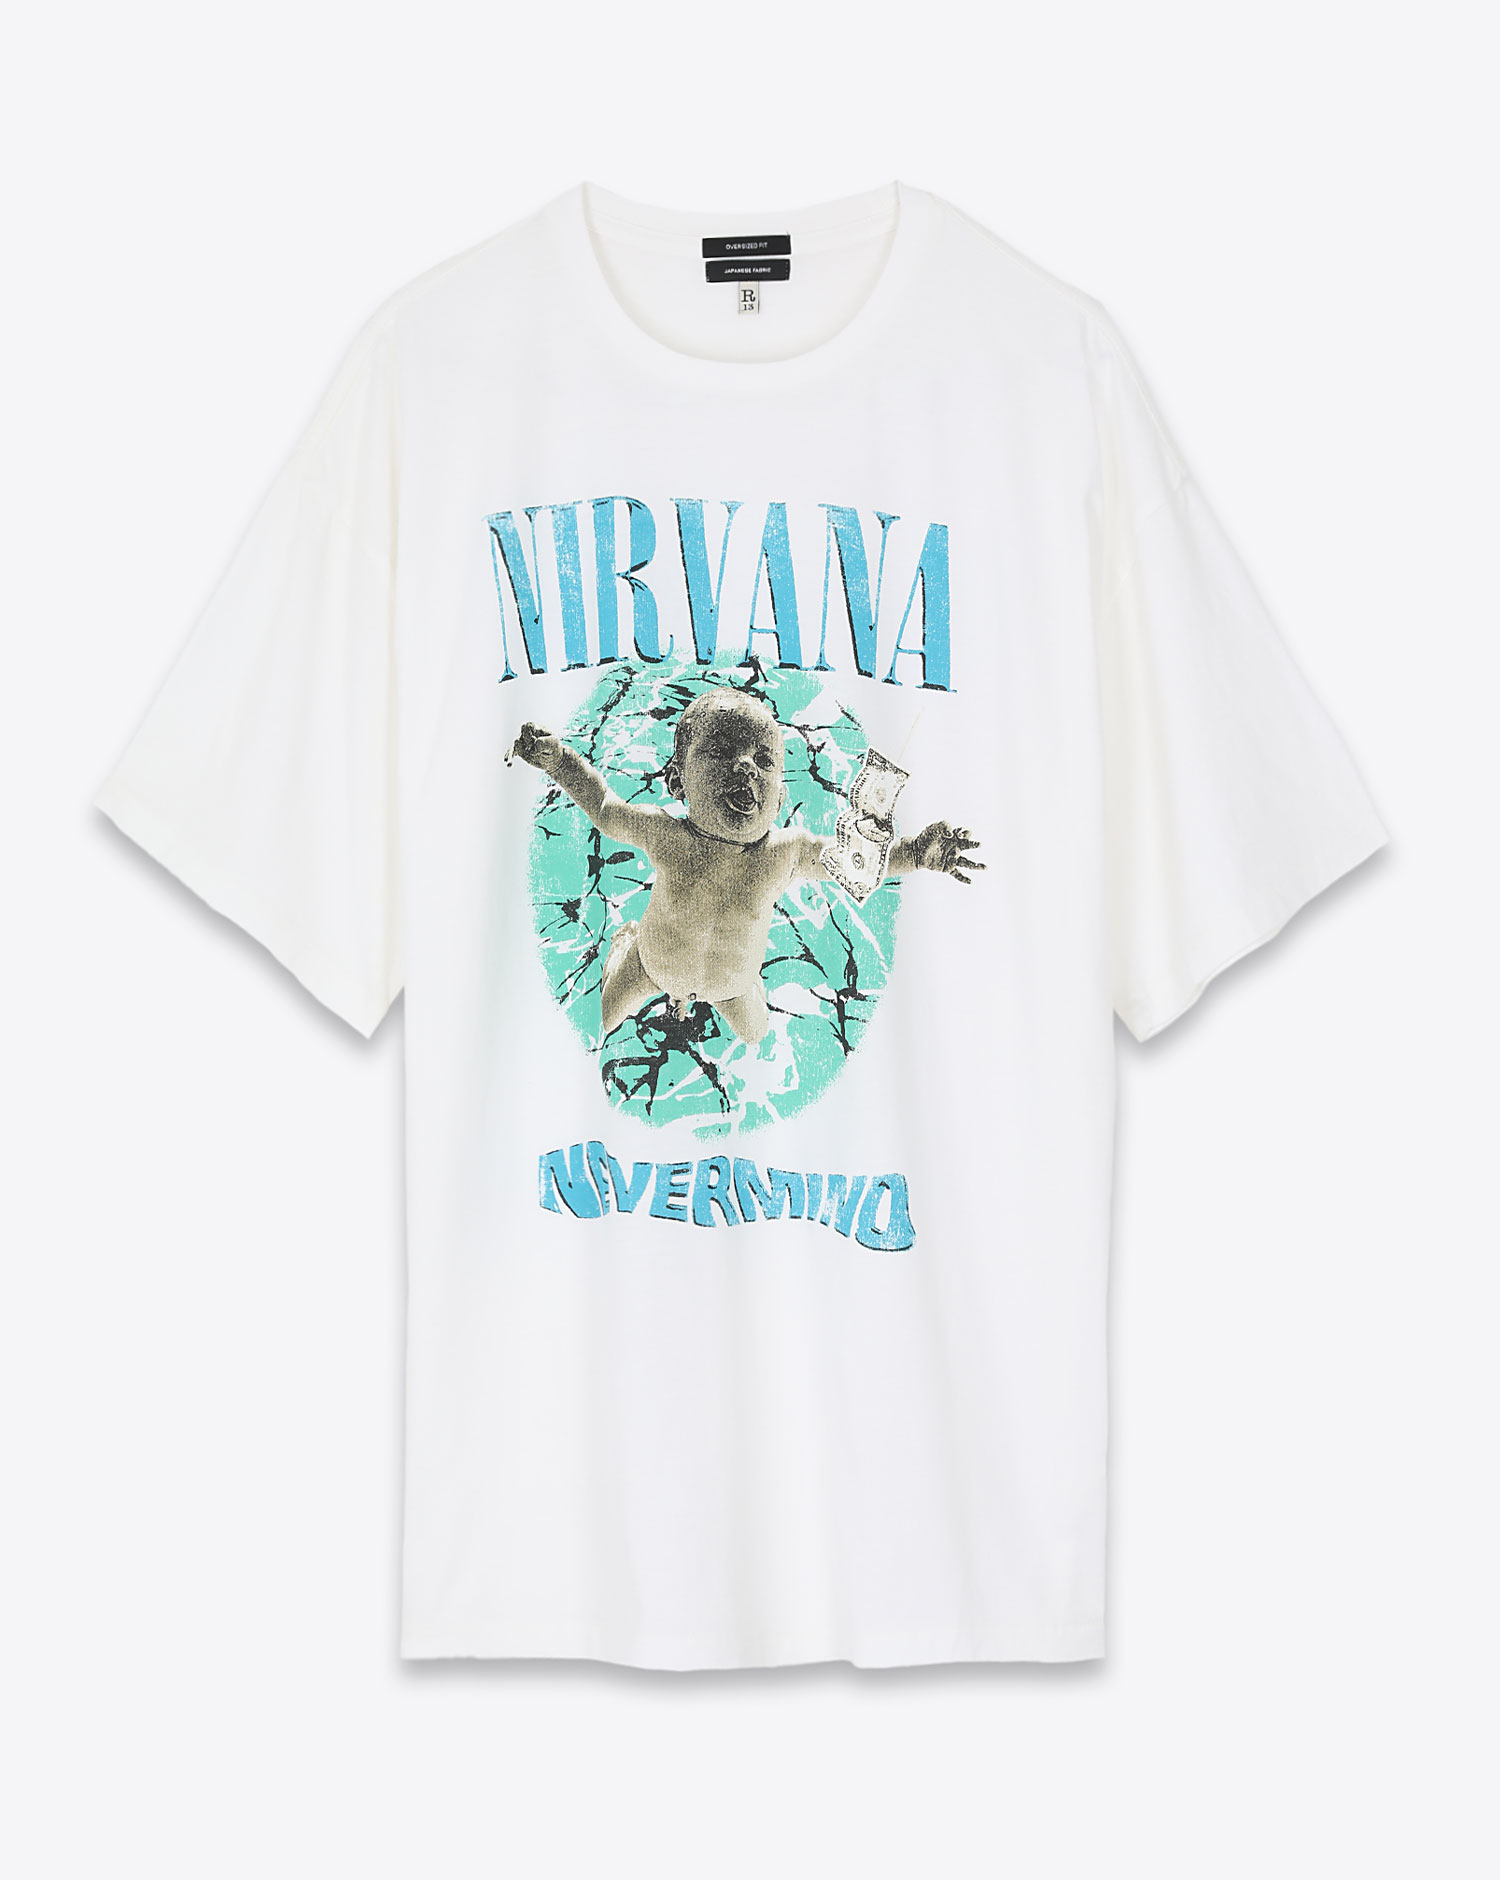 Tee-Shirt Nirvana Nevermind Album Cover R13 Denim